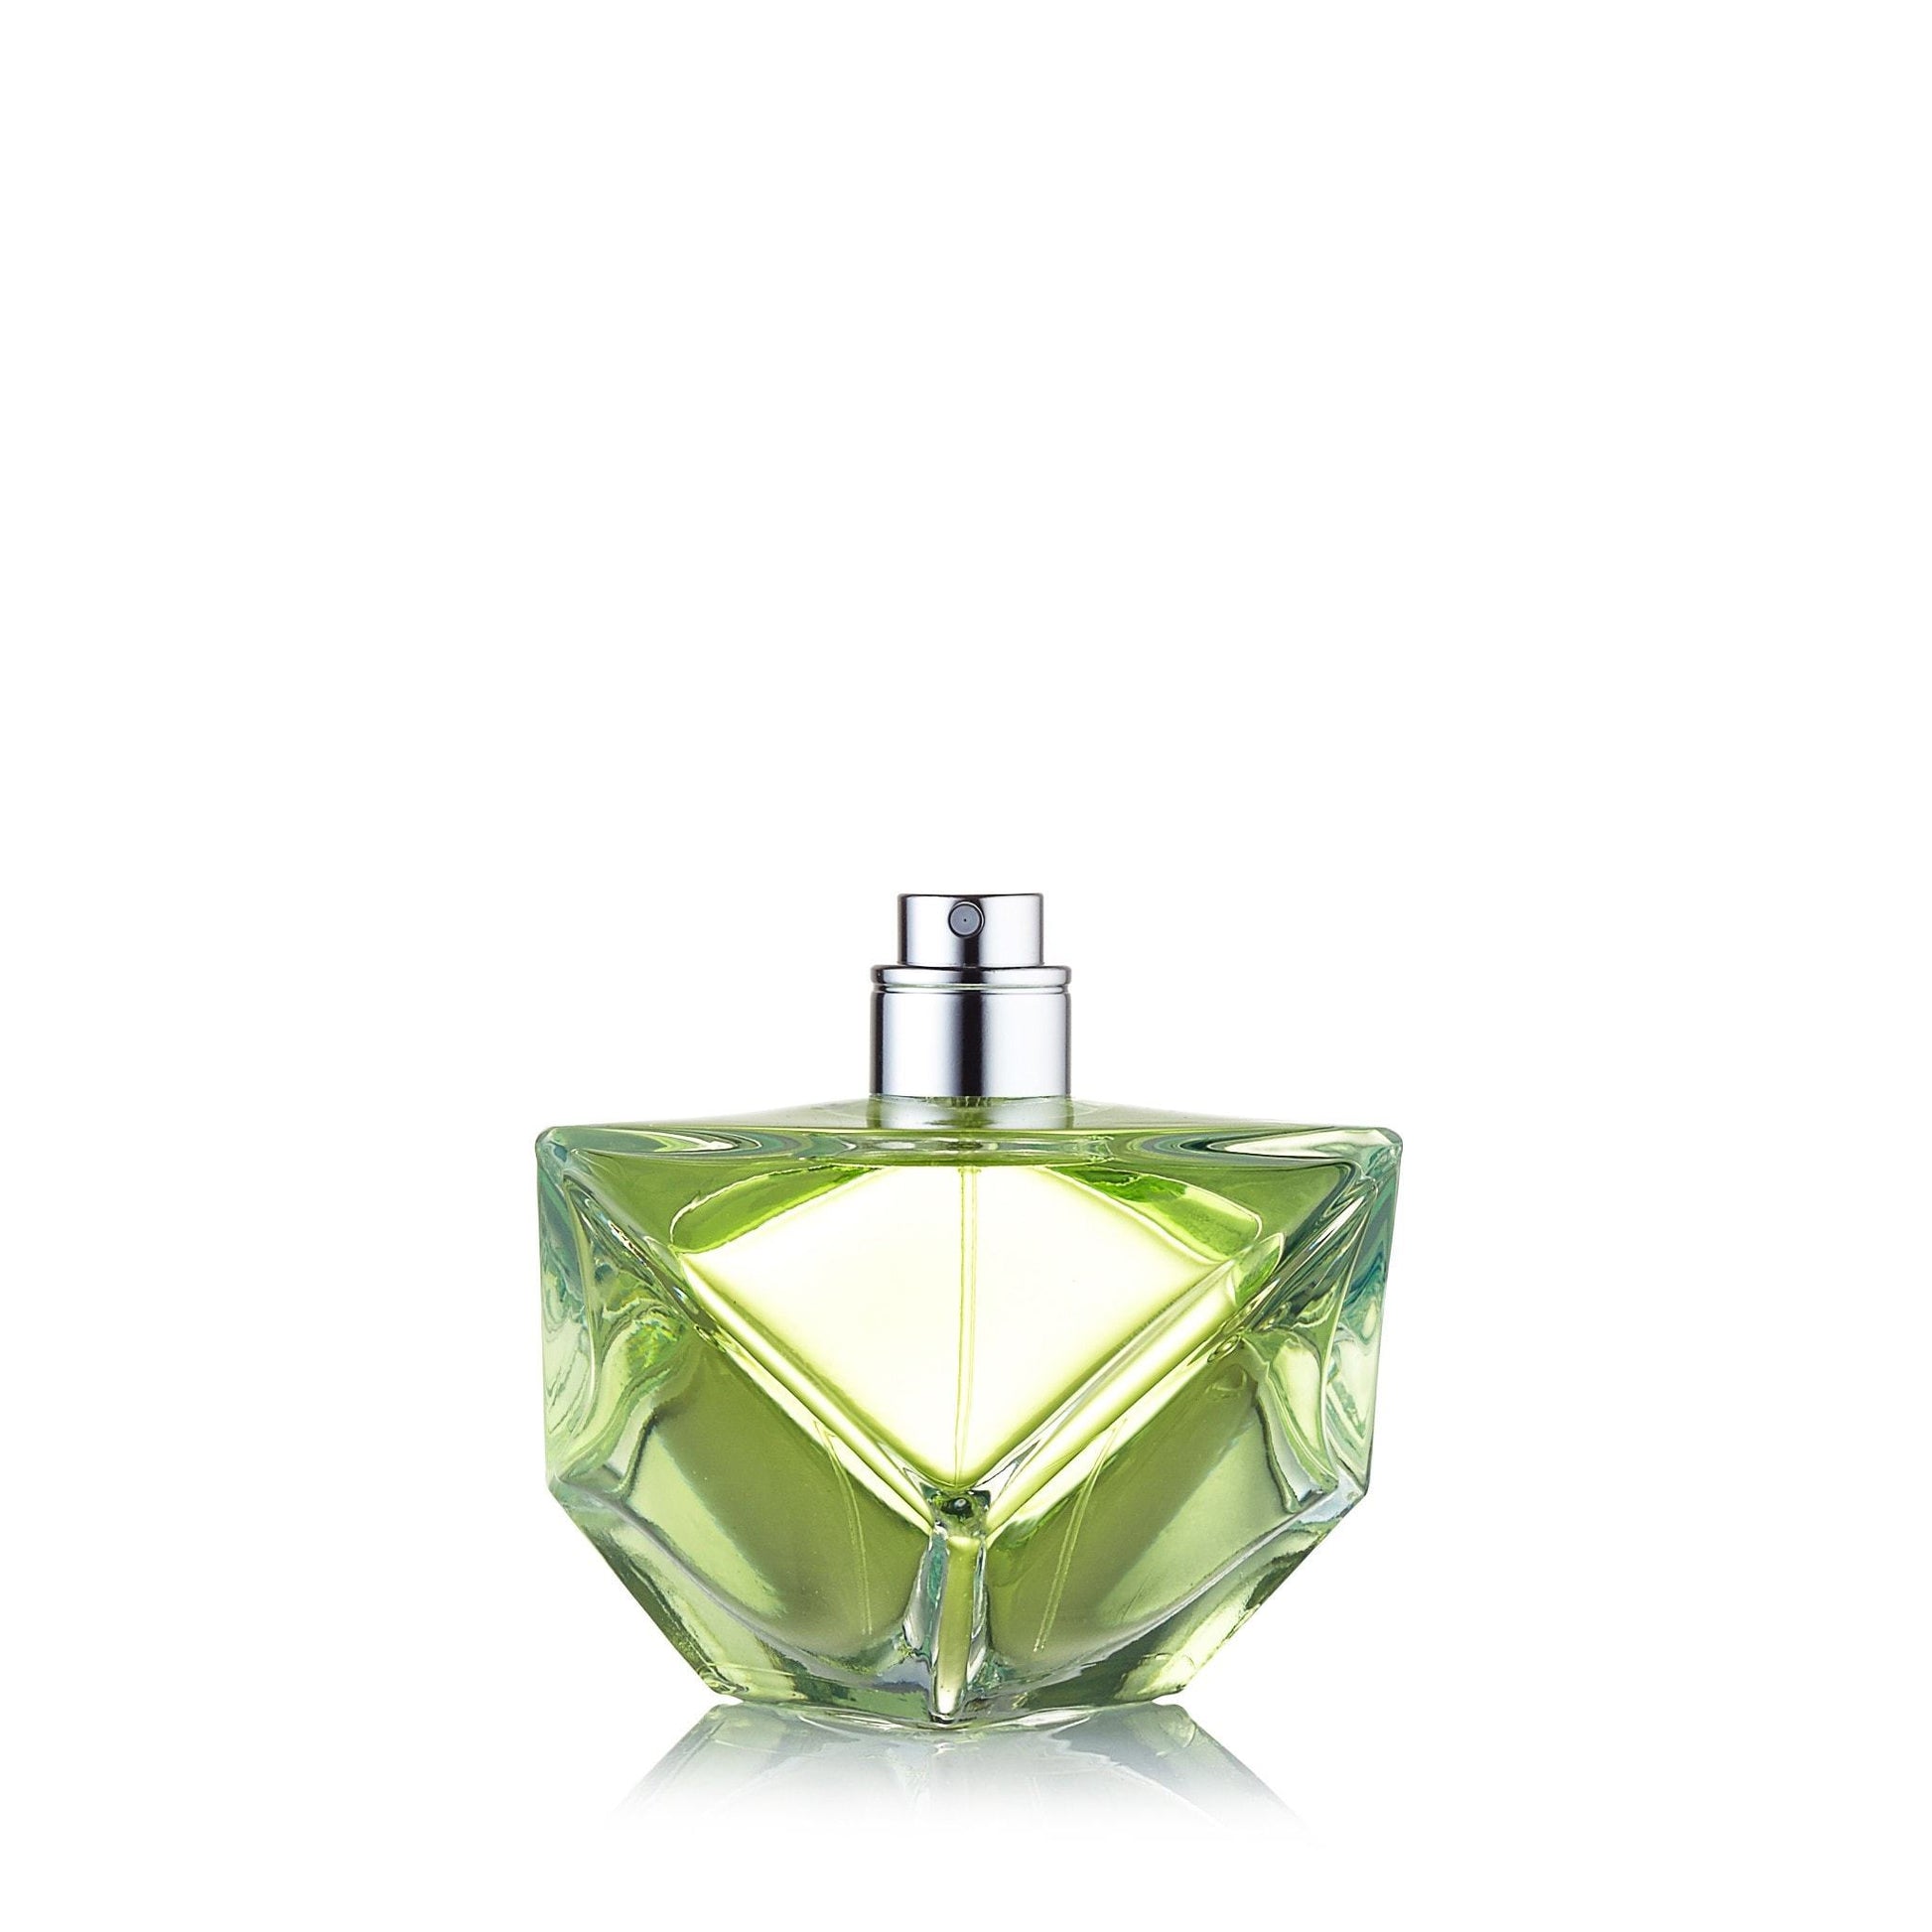 Believe Eau de Parfum Spray for Women by Britney Spears, Product image 1